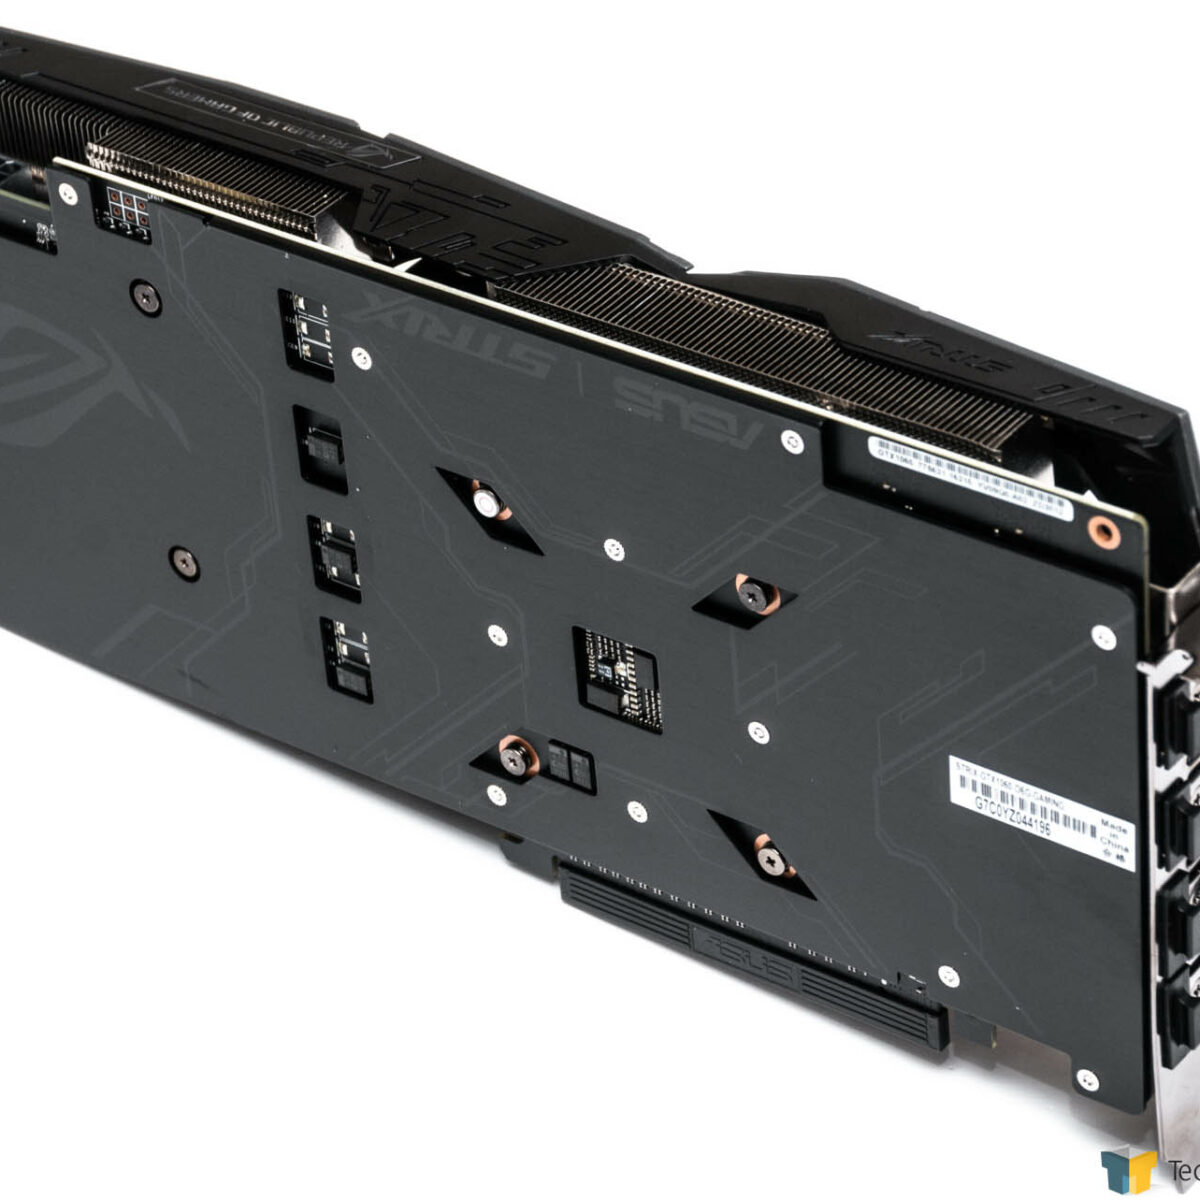 ASUS GeForce GTX 1060 6GB Strix Graphics Card Review – Techgage